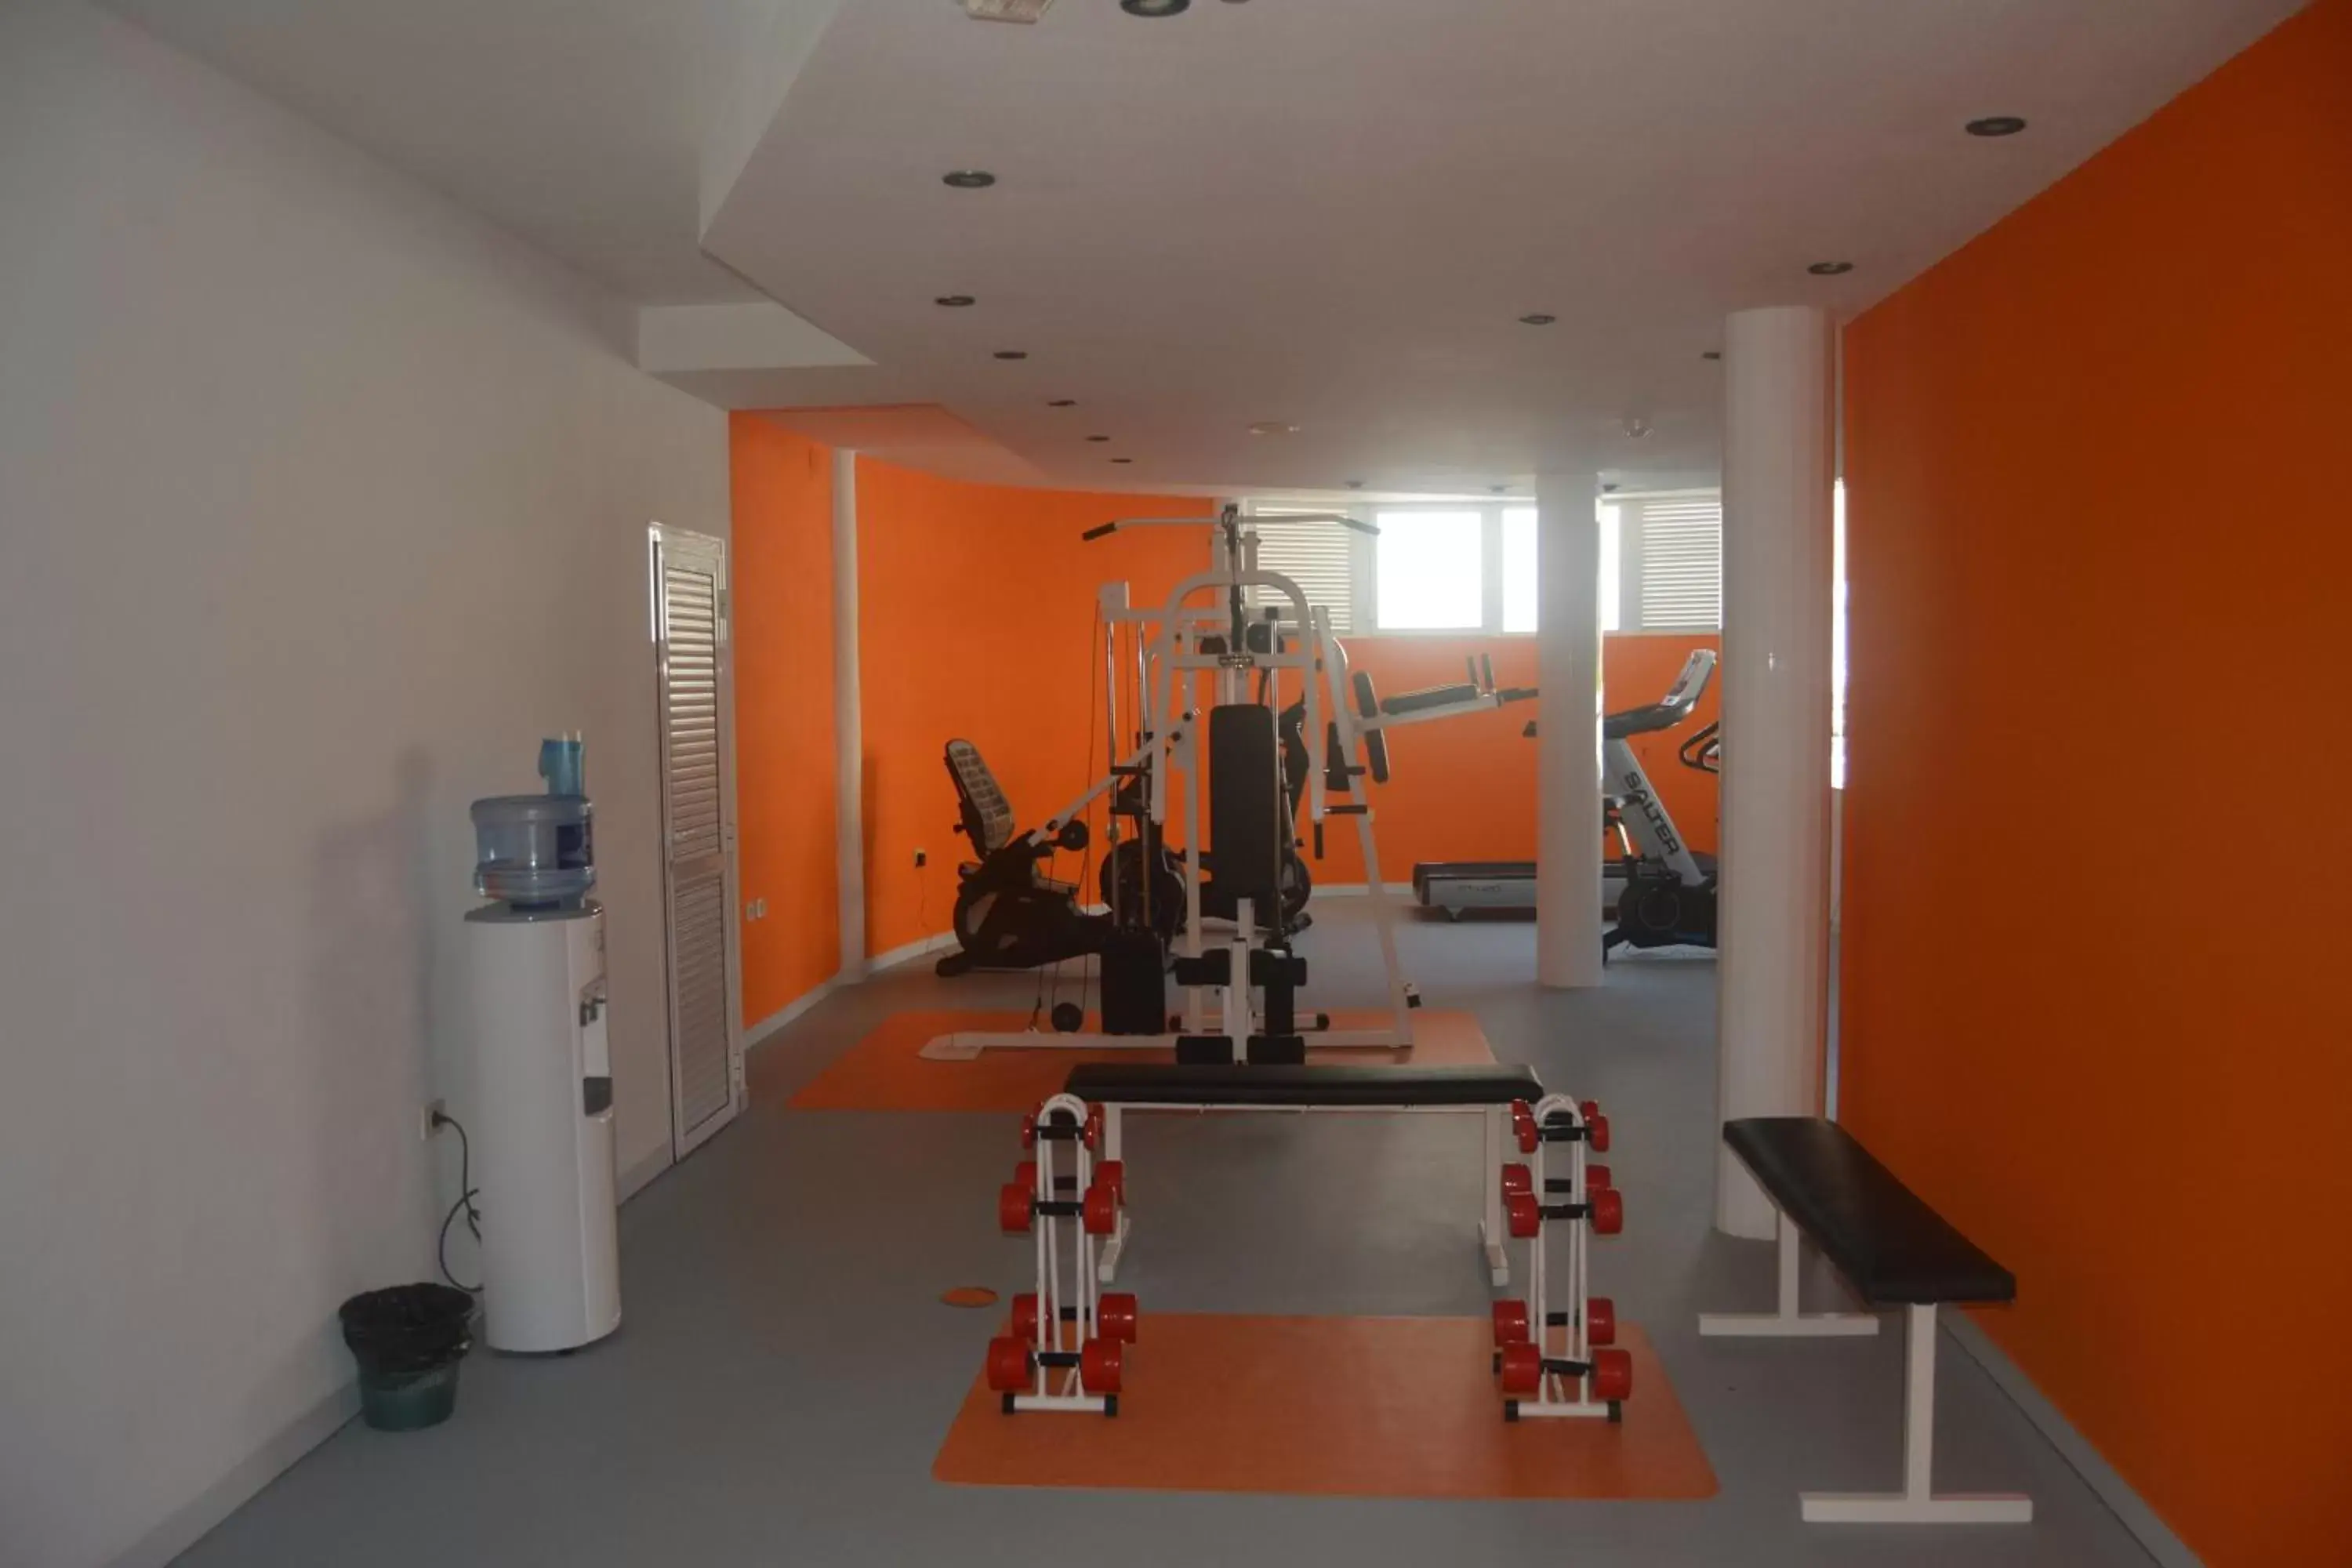 Fitness centre/facilities, Fitness Center/Facilities in RF San Borondon